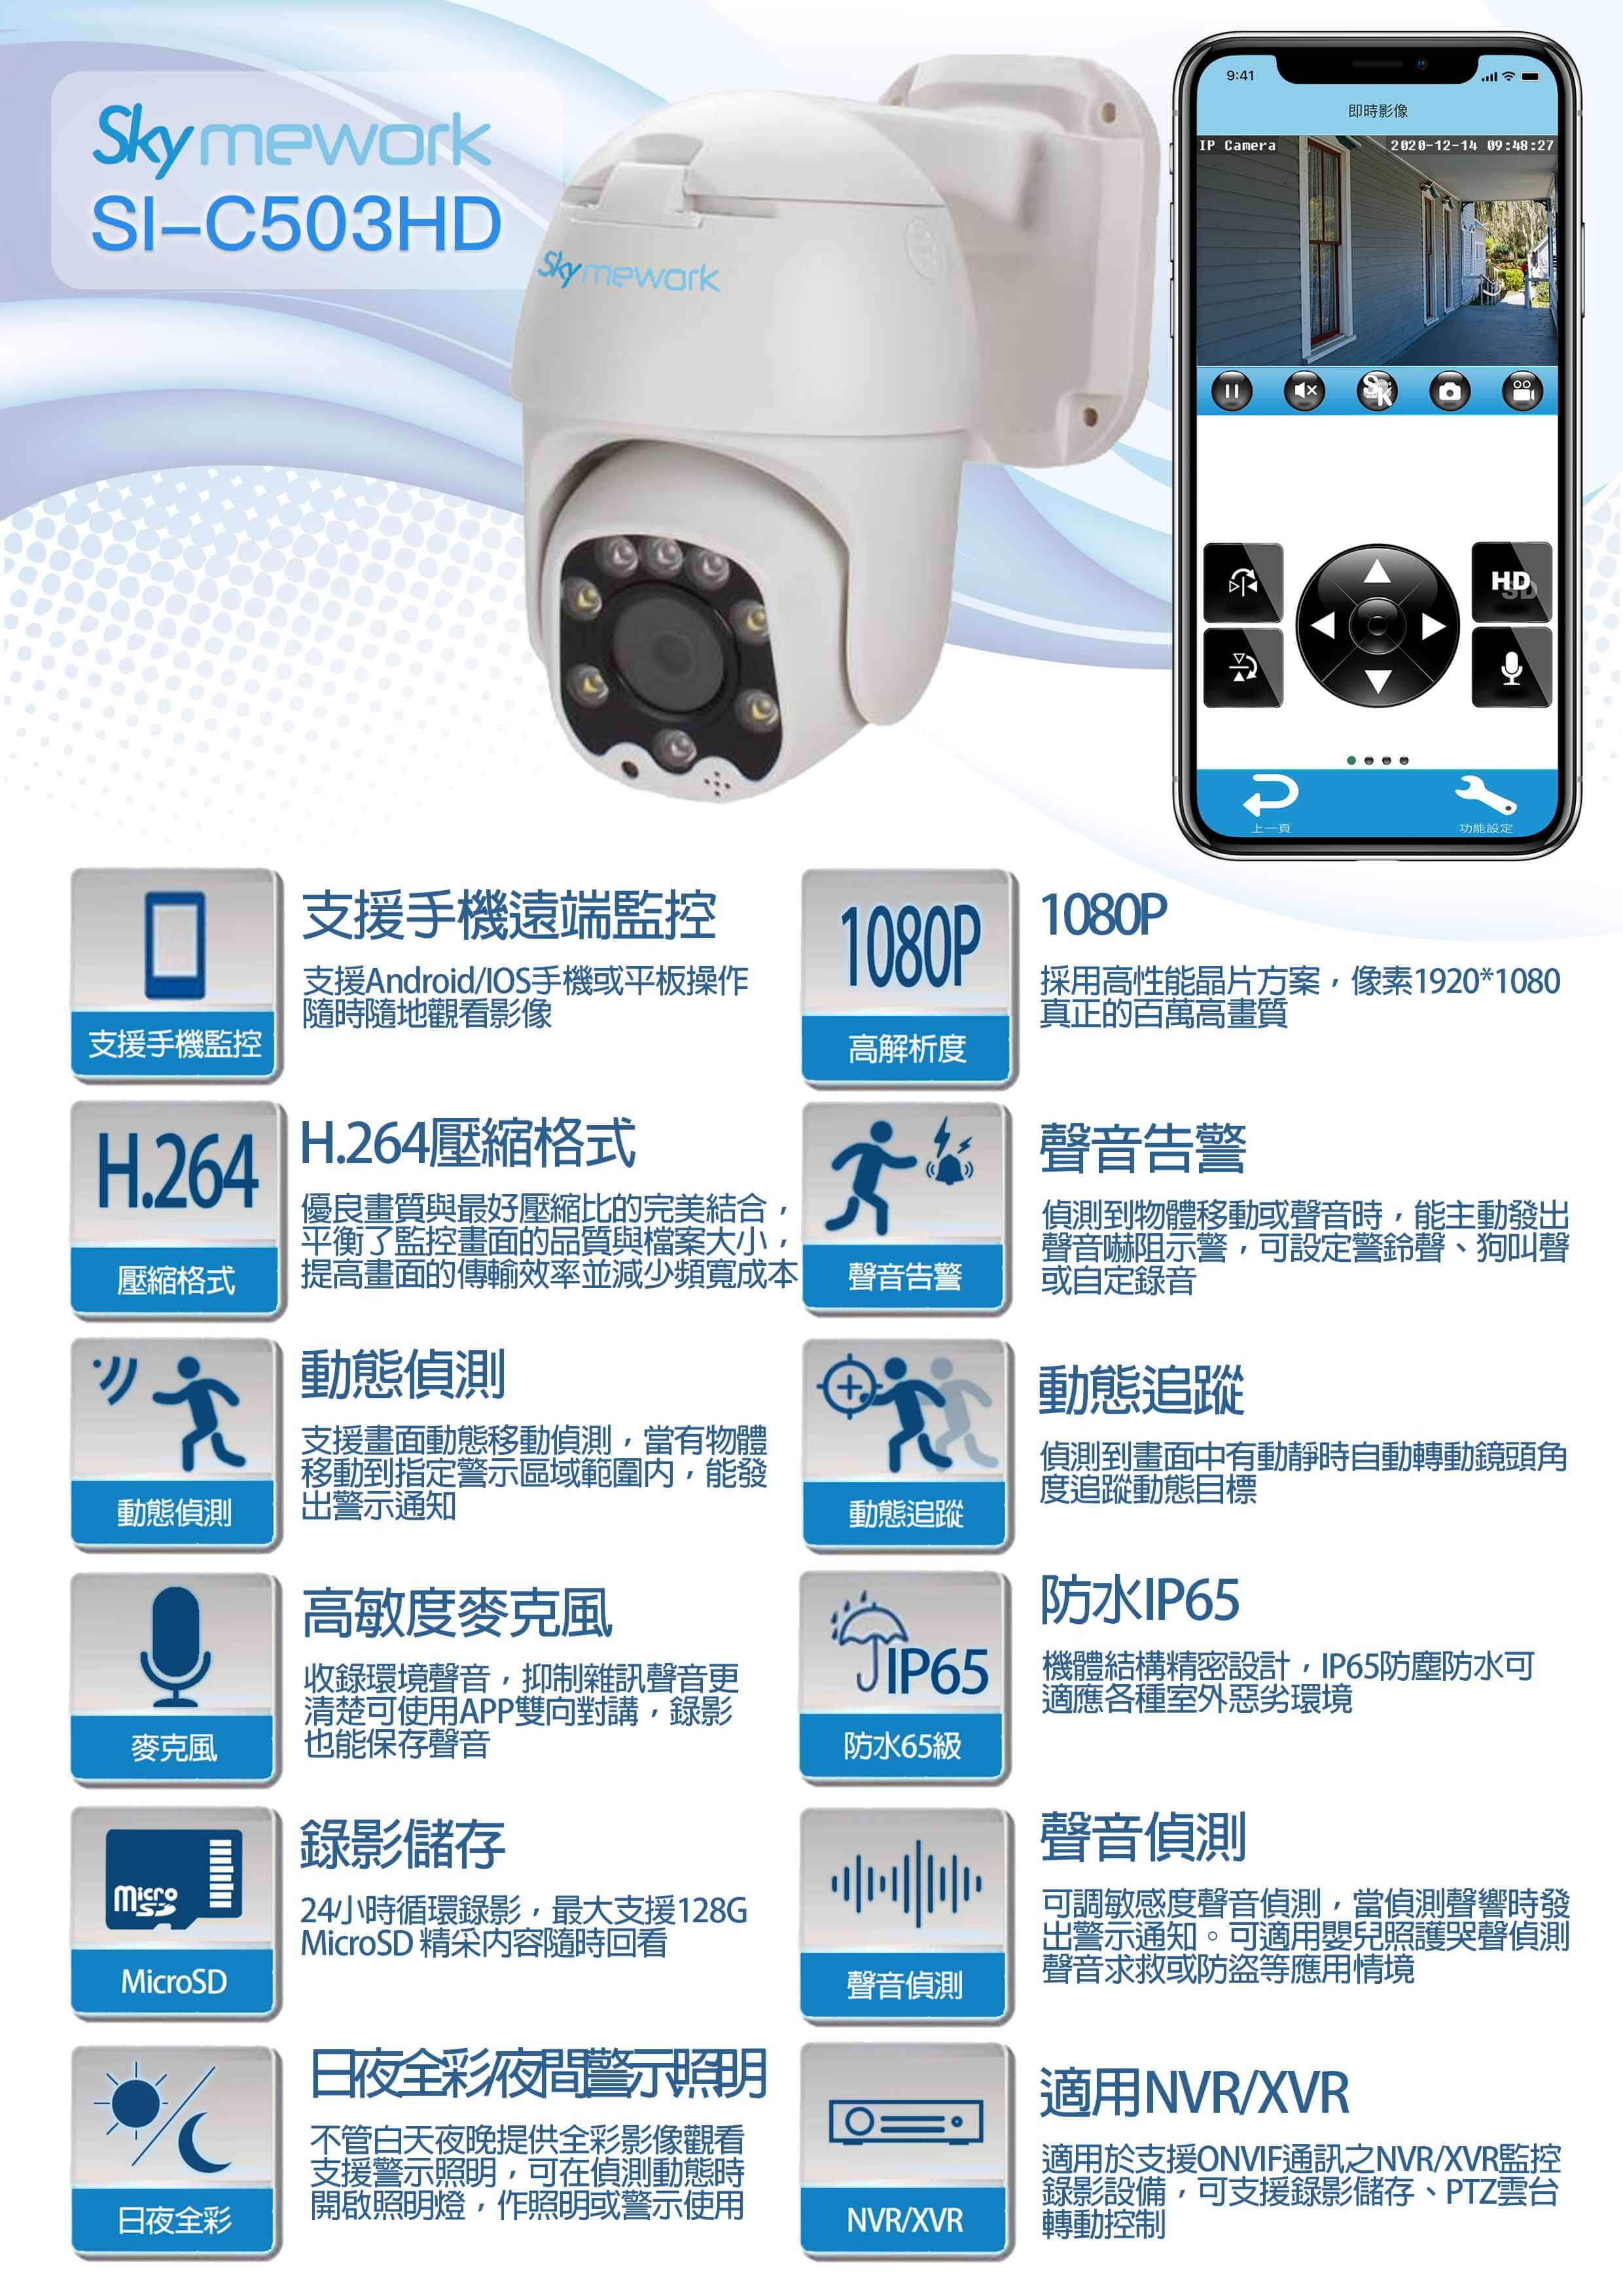 2021080203 - SI-C503HD 1080P 自帶雲台動態追蹤 戶外防水攝影機